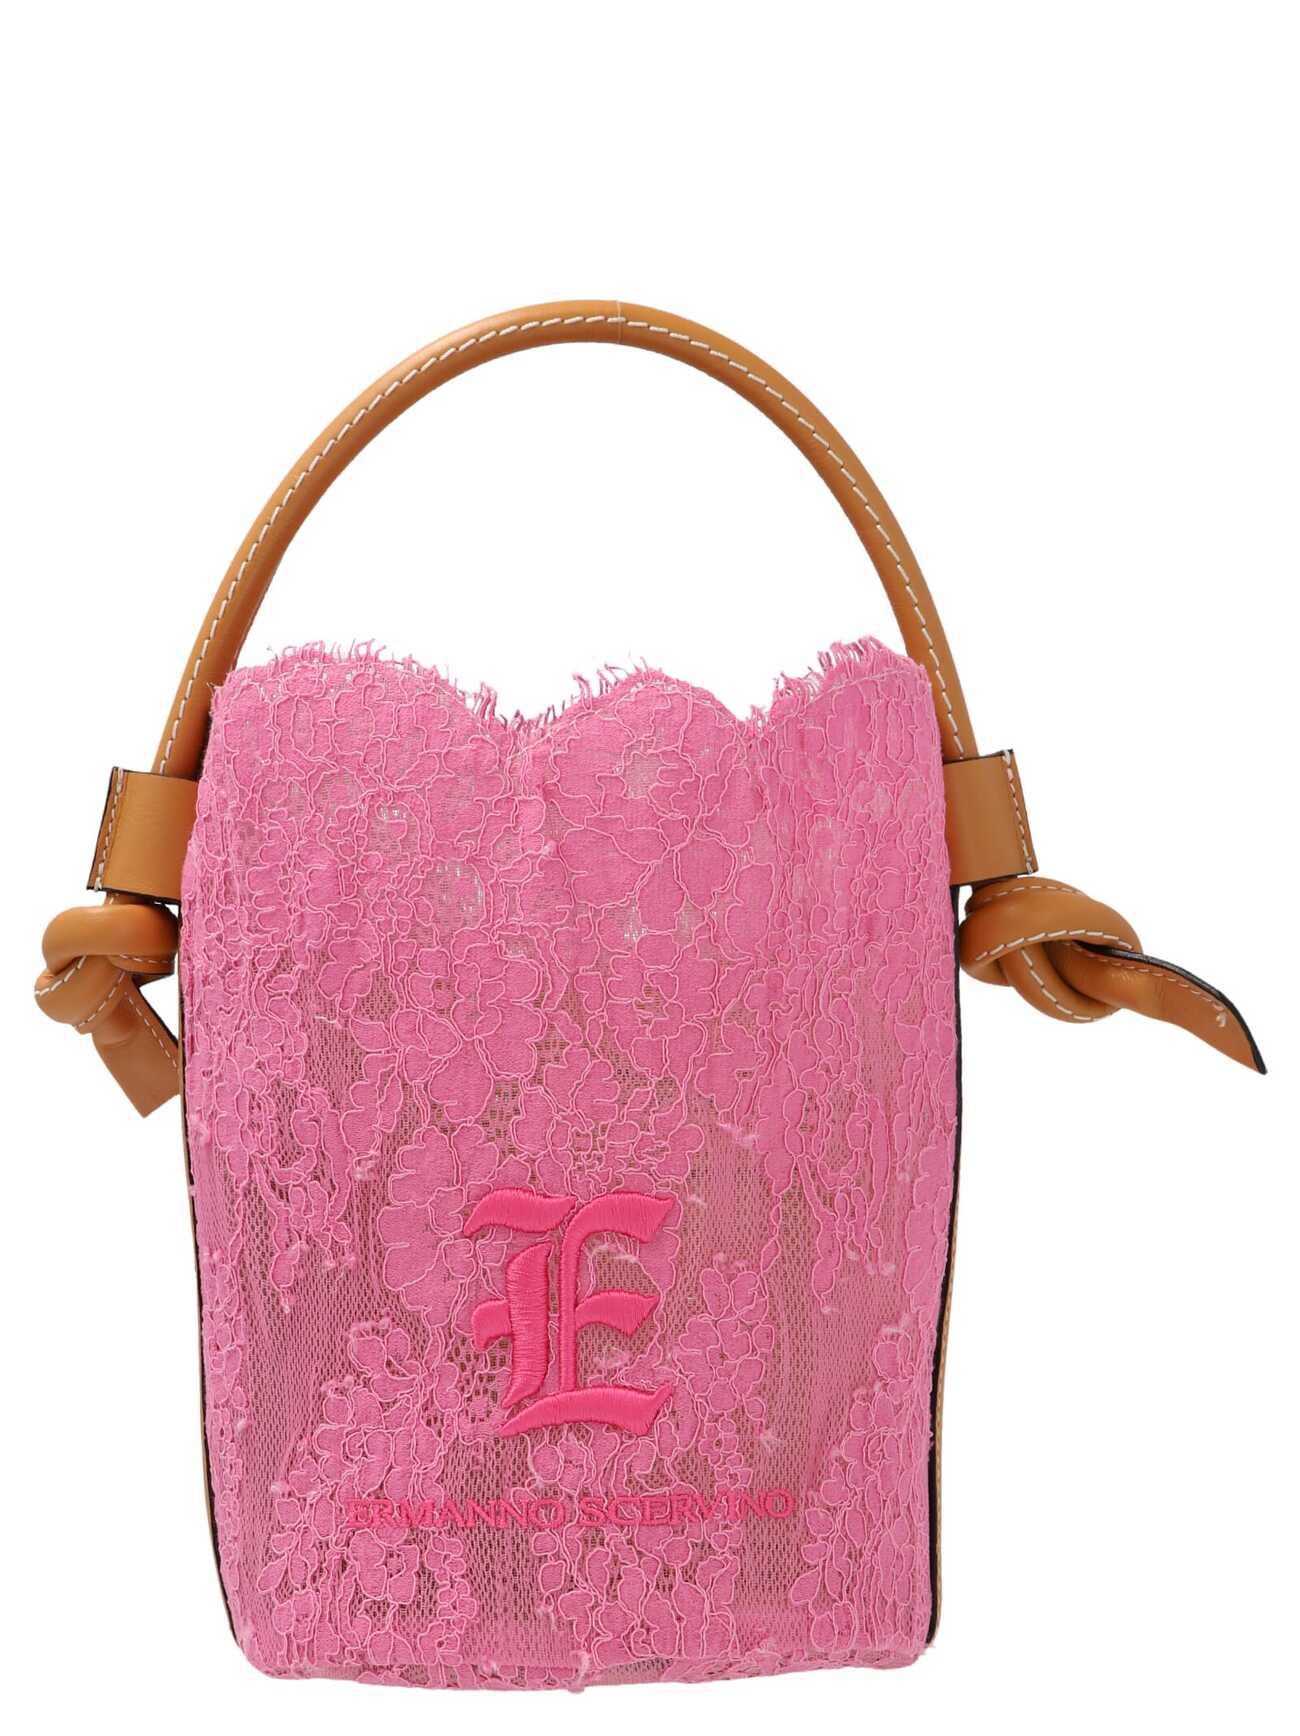 Ermanno Scervino Lace Bucket Bag in pink